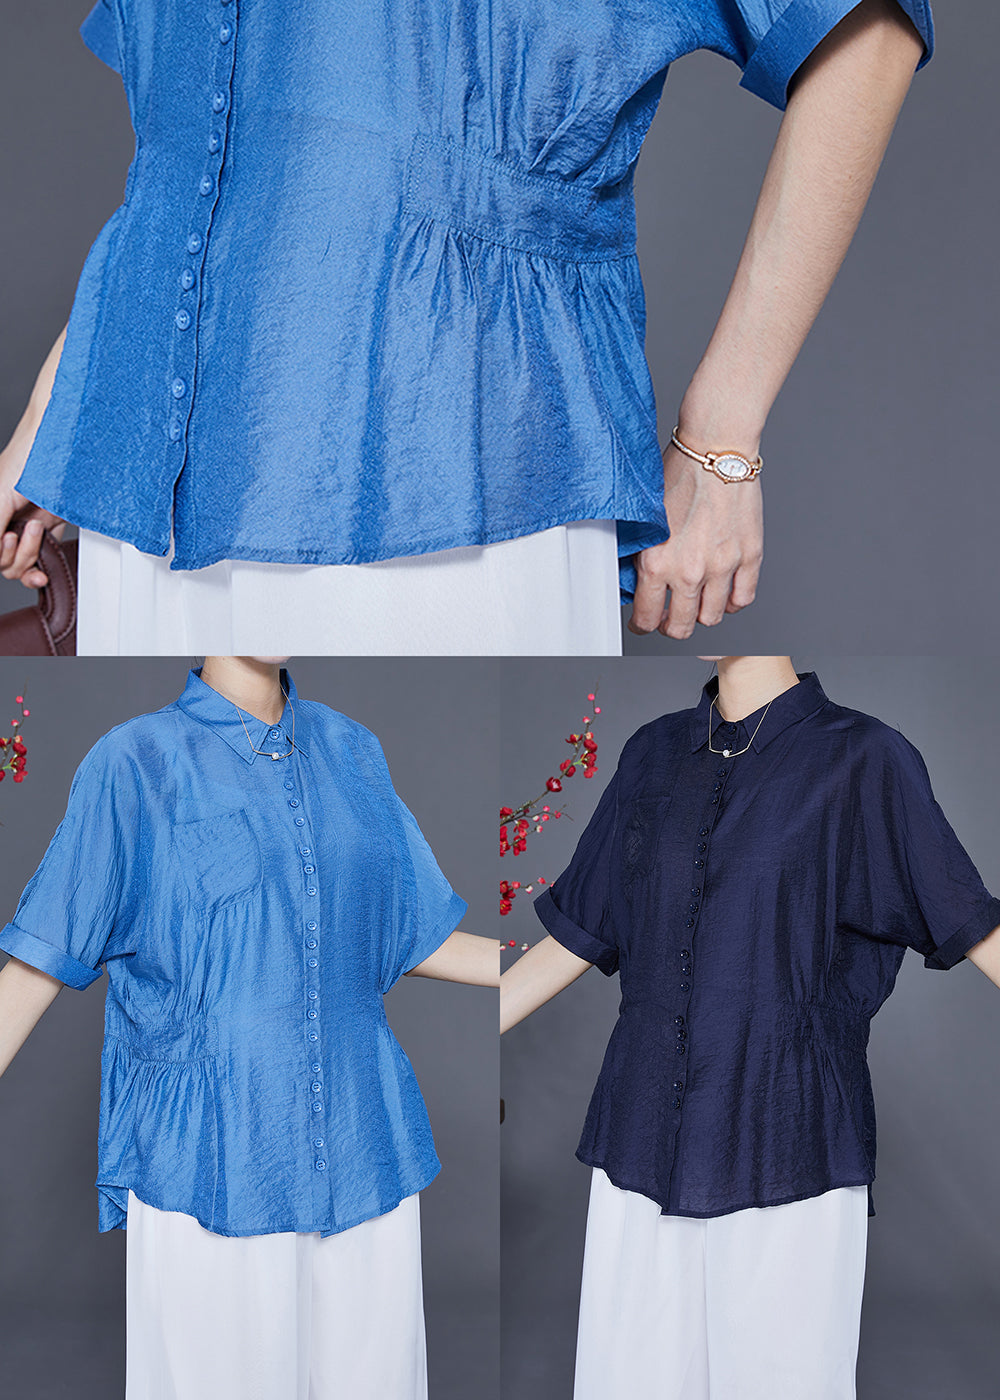 Casual Blue Peter Pan Collar Wrinkled Silk Shirt Tops Summer LY2411 - fabuloryshop